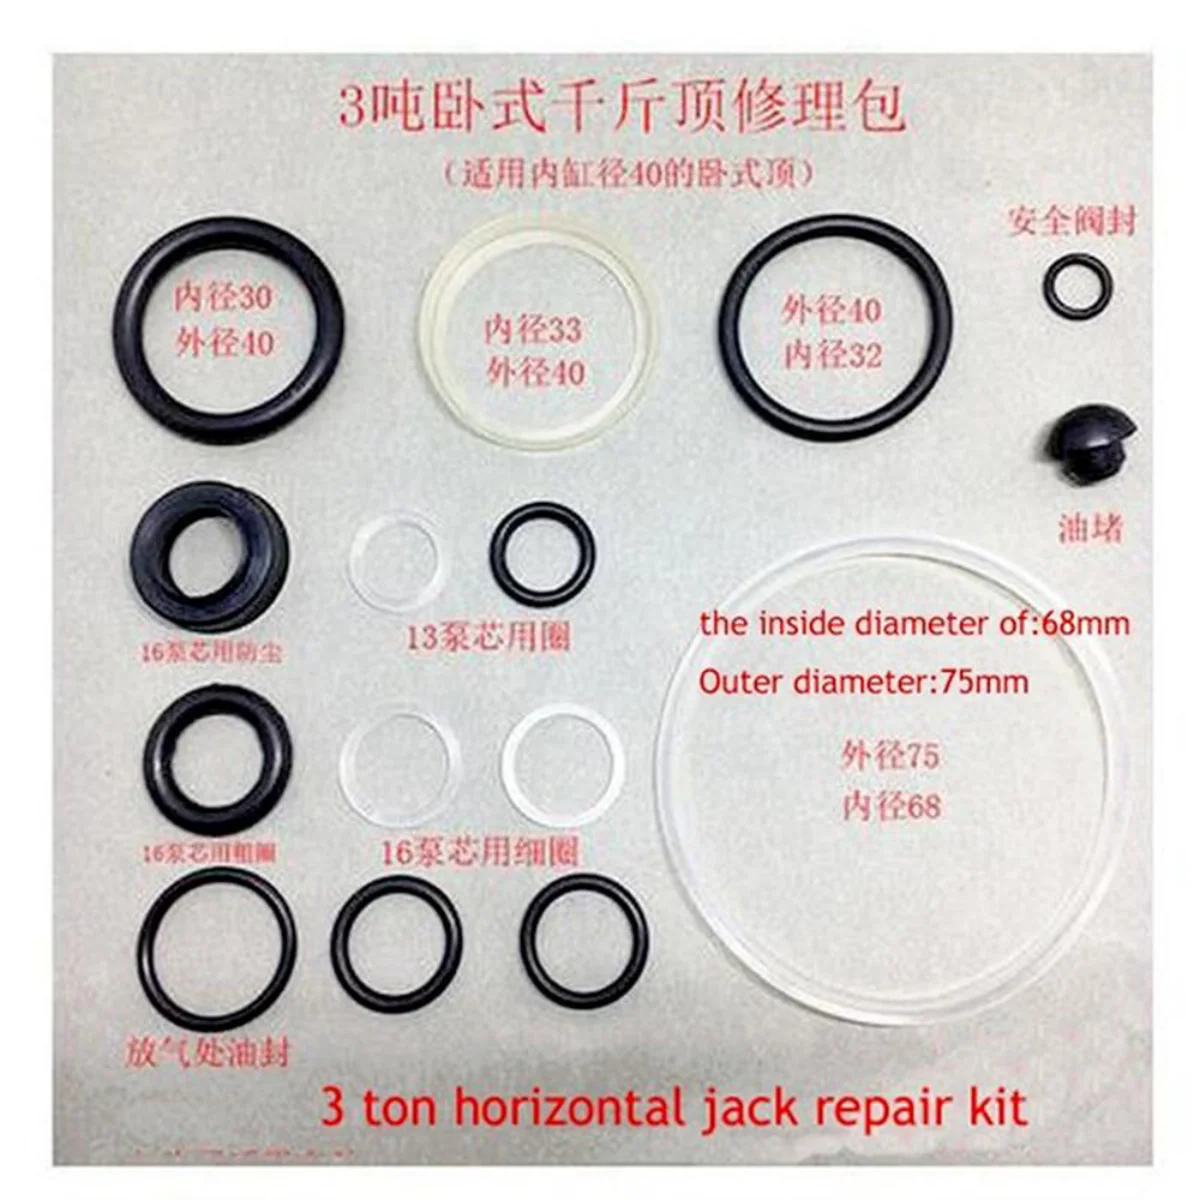 NEW 3-4 Ton Horizontal Double Pump Jack Repair Kit Jack Accessories 1Set/14pcs Universal